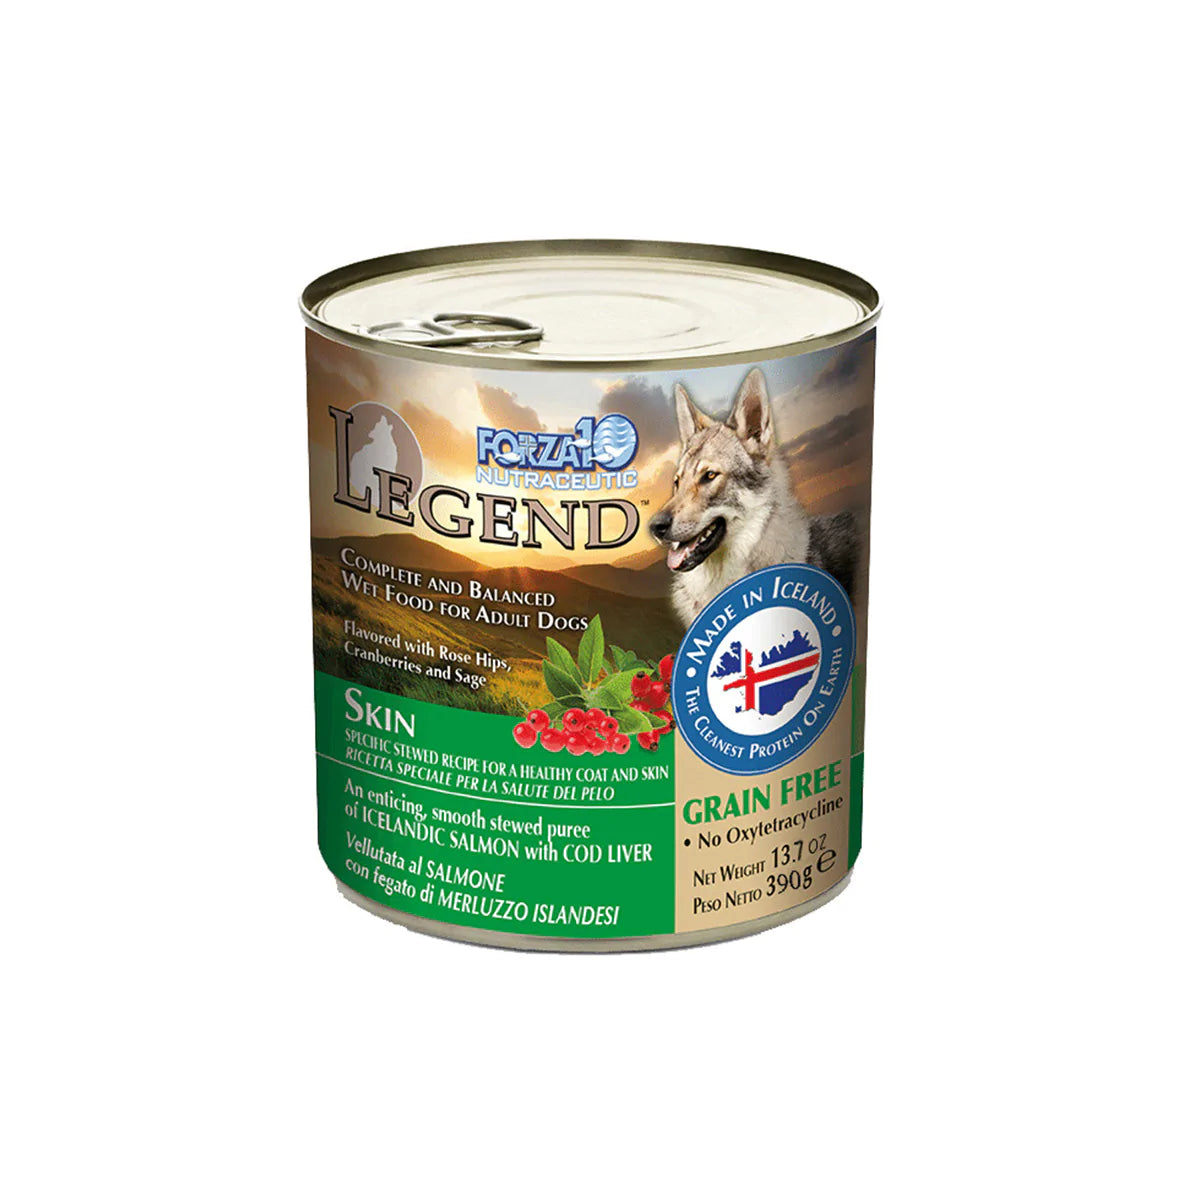 FORZA10 NUTRACEUTIC LEGEND SKIN ICELANDIC FISH RECIPE GRAIN-FREE CANNED DOG FOOD